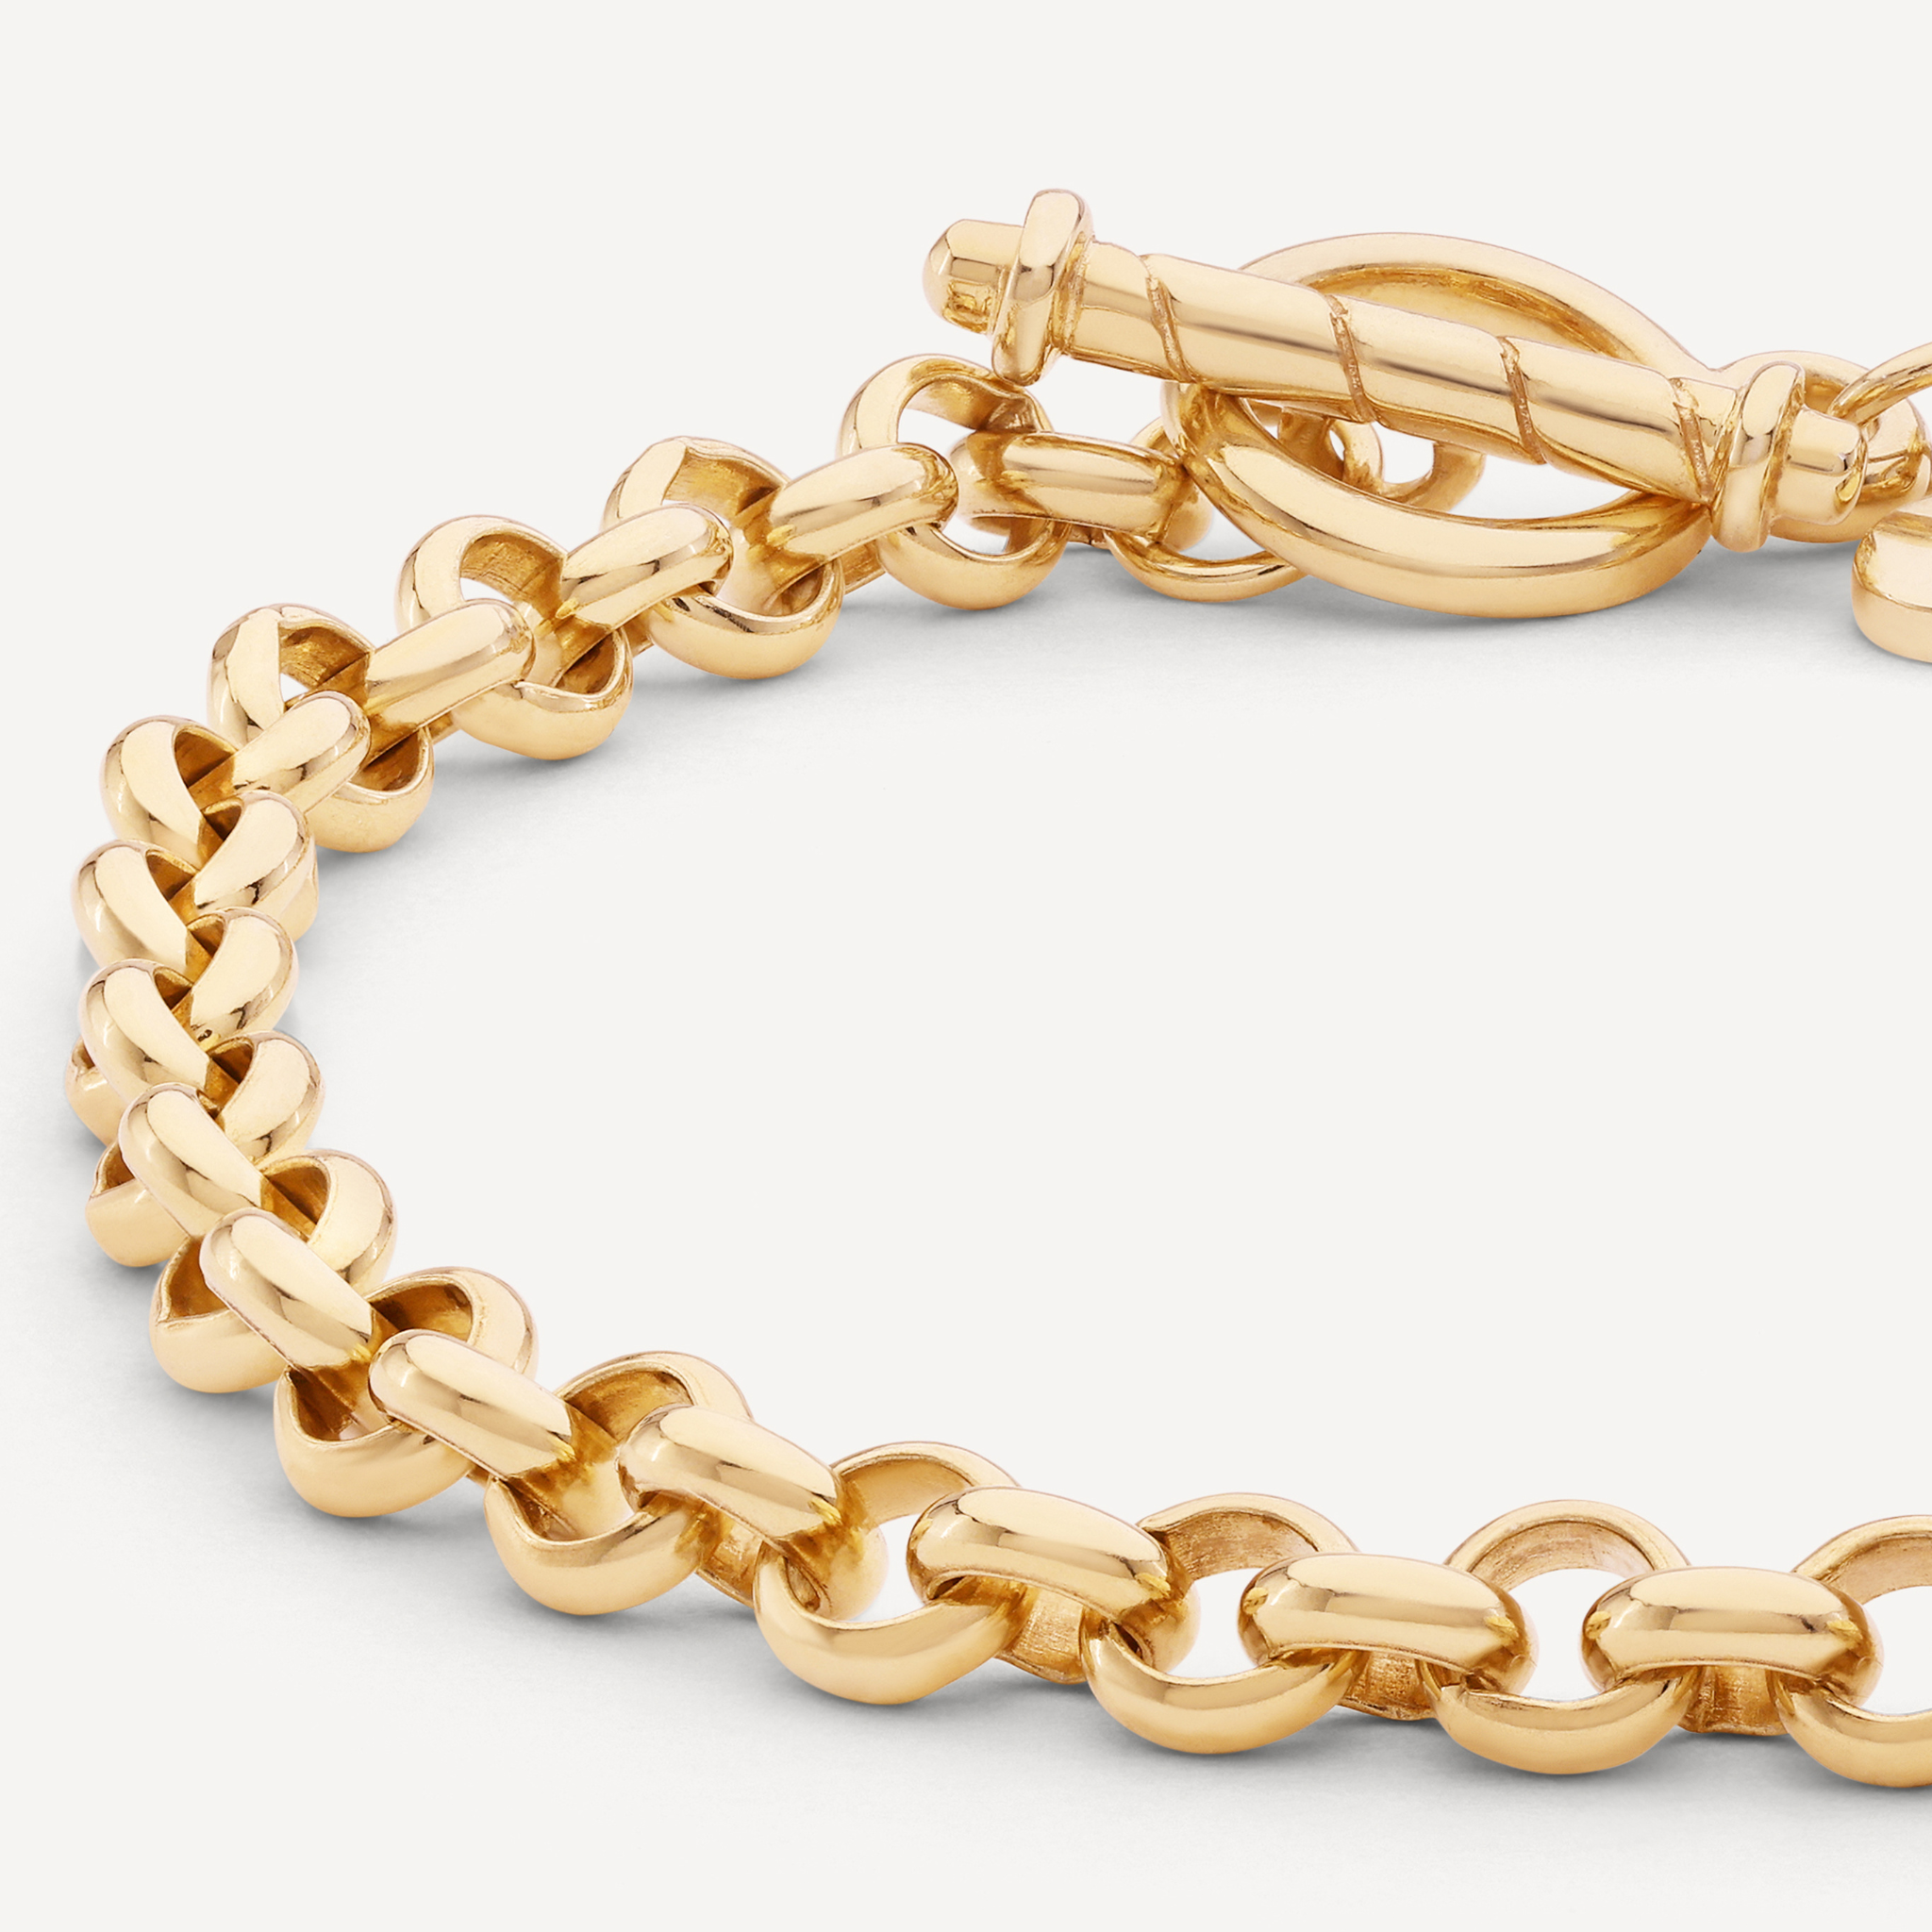 Shona gold bracelet